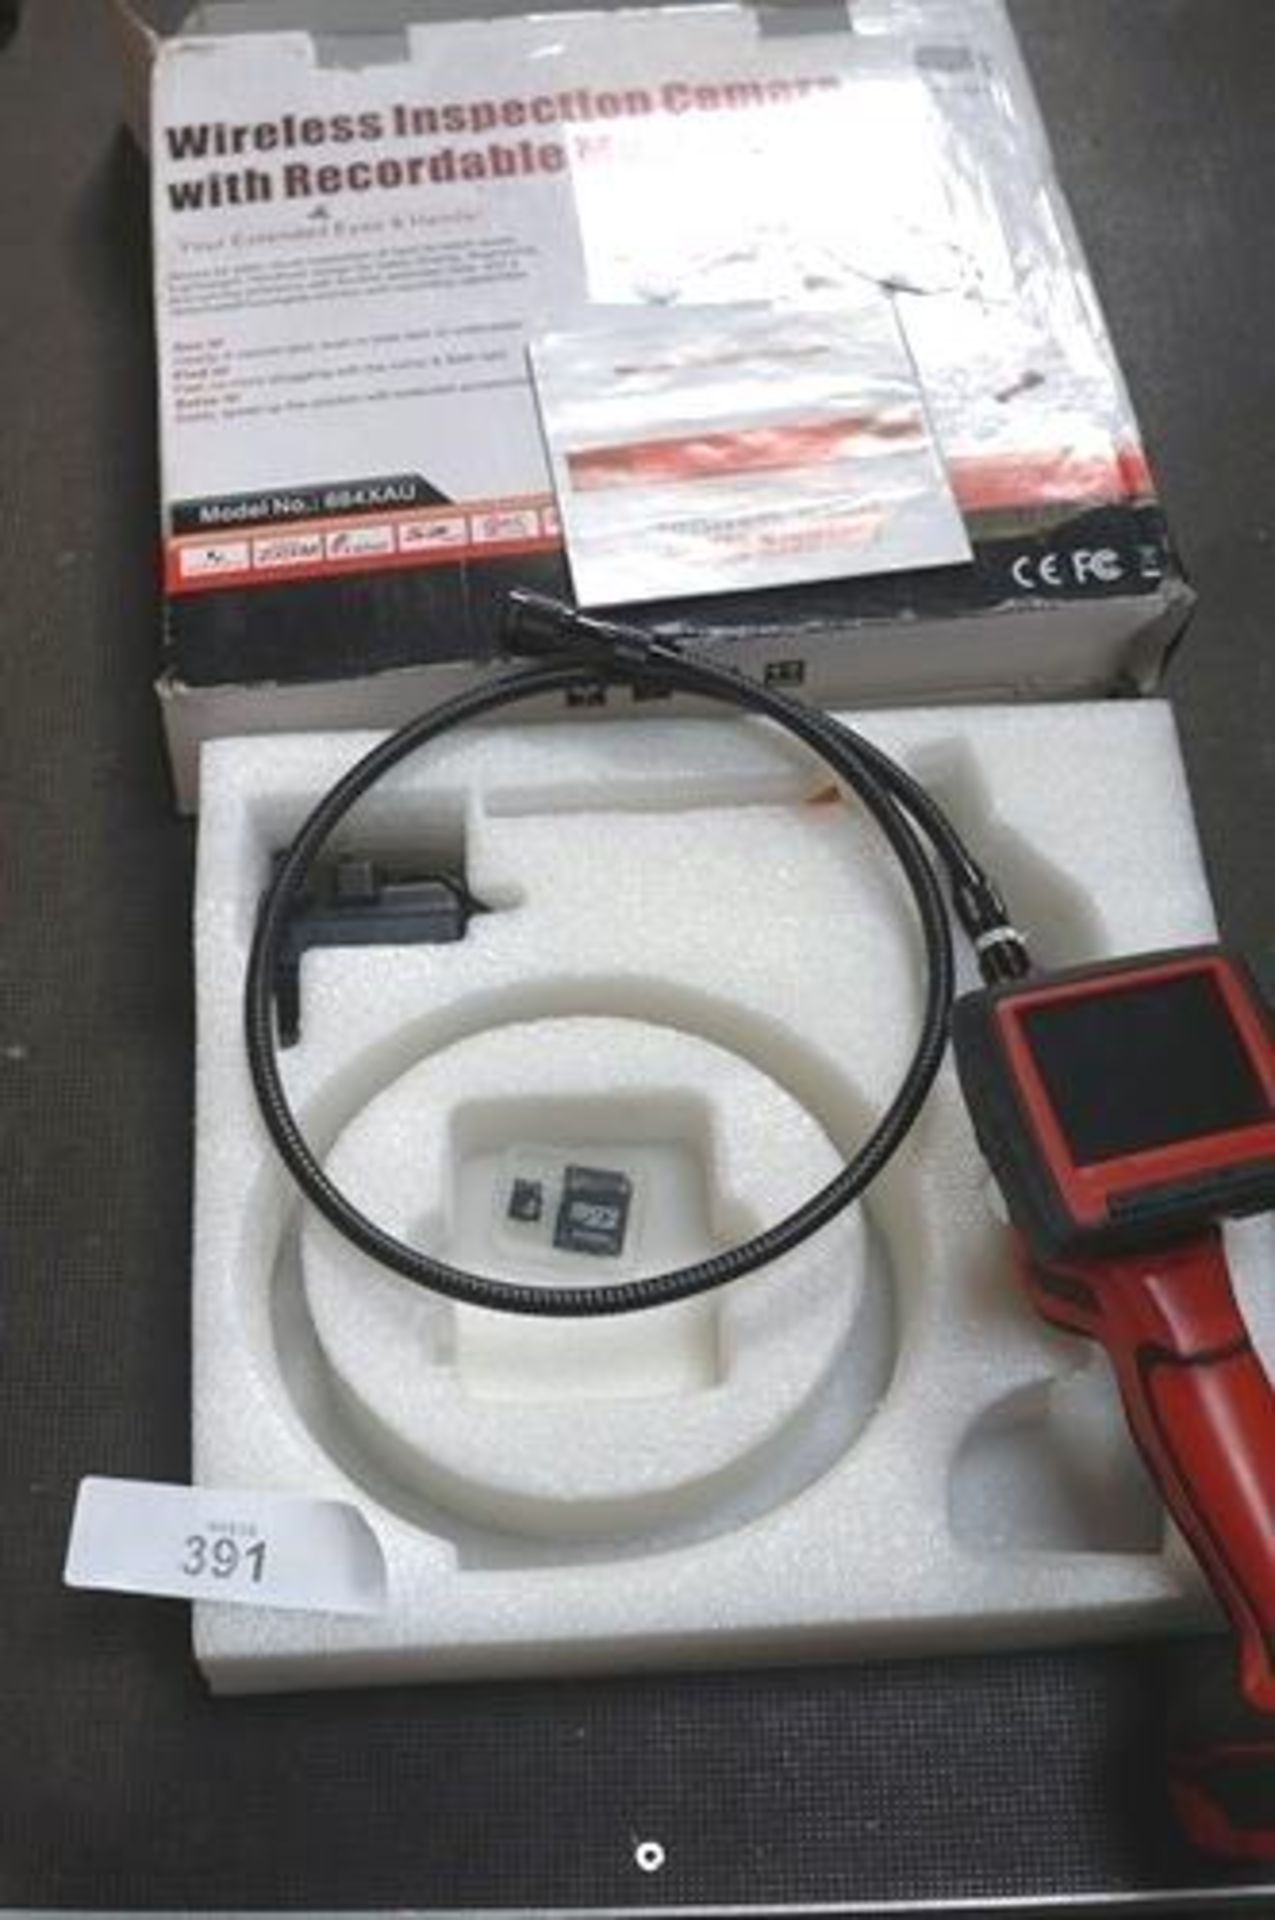 1 x wireless inspection camera kit (missing camera), model 884XAU - grade B (SW9B)